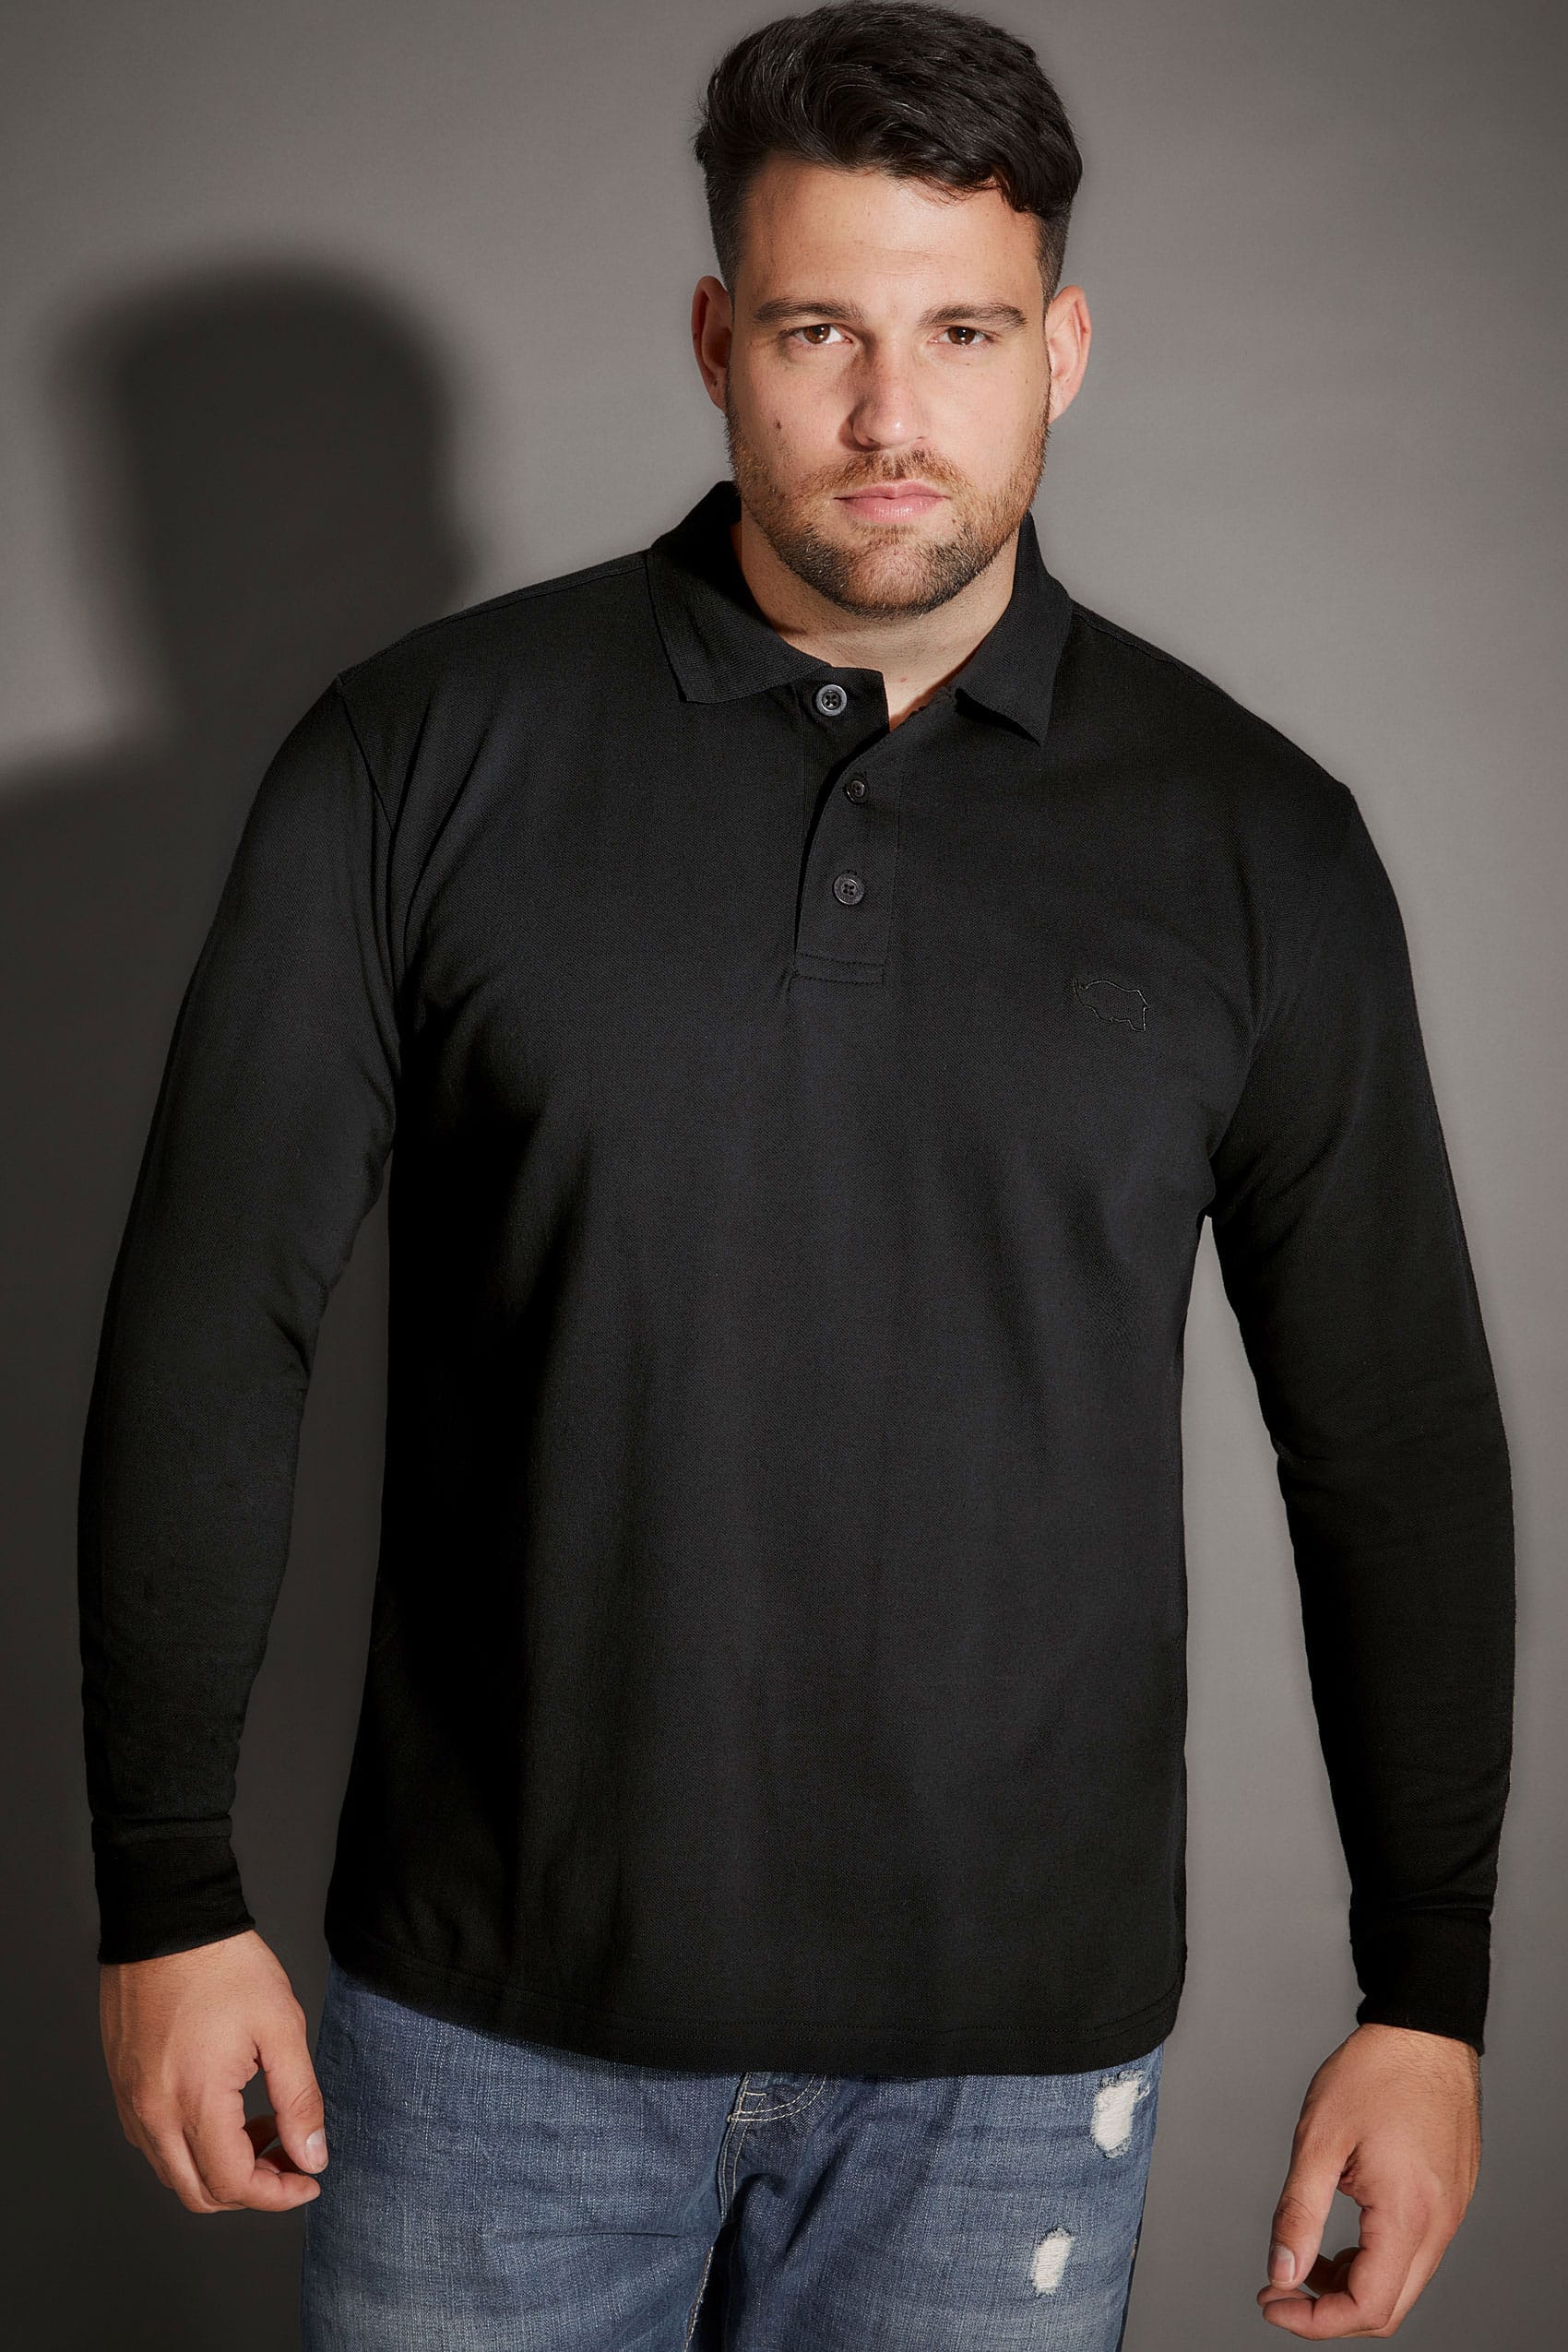 BadRhino Black Long Sleeve Polo Shirt, Size L to 8XL